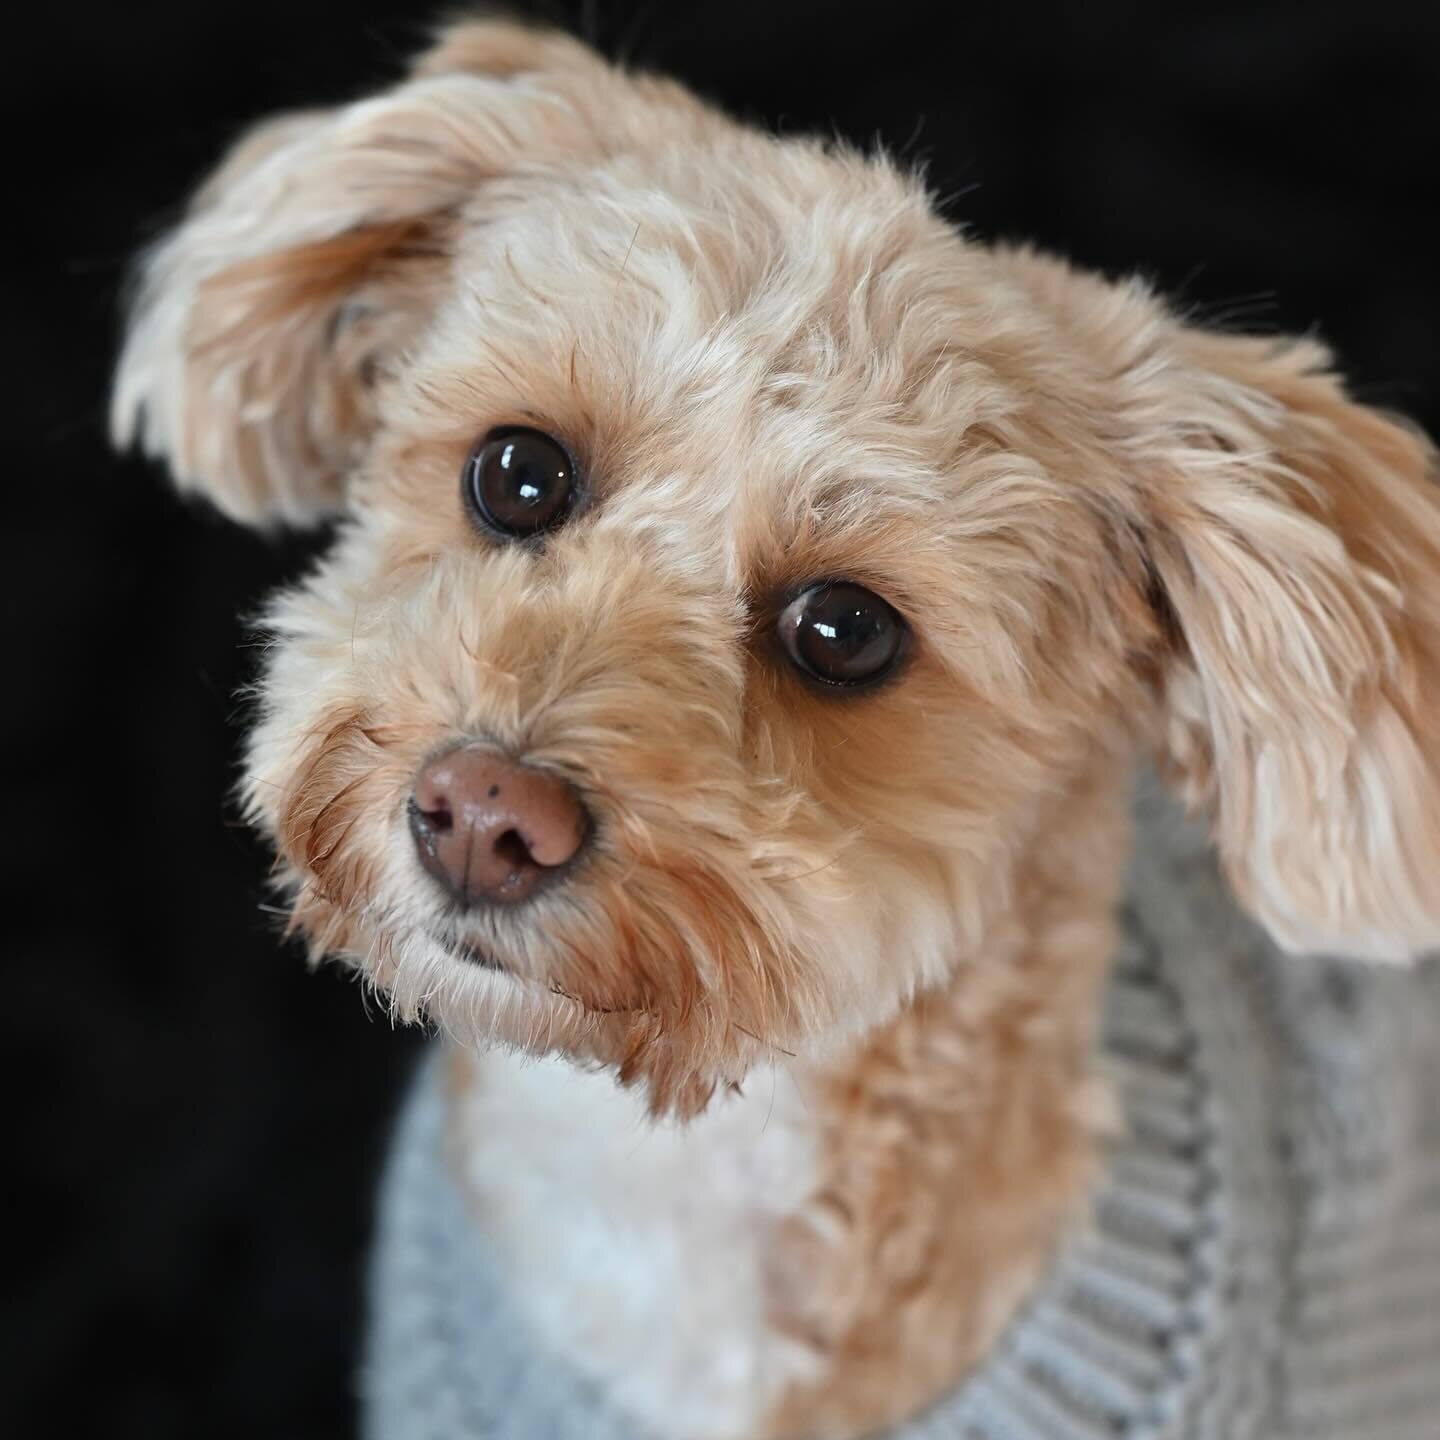 What an adorable sweet furbaby. Poppy is simply precious 🐶#LoriGphotography #petportraits #dogphotography #dogsofinstagram #dogoftheday #dogphotographer #yorkiepoo #Indianaphotographer #michiganphotographer